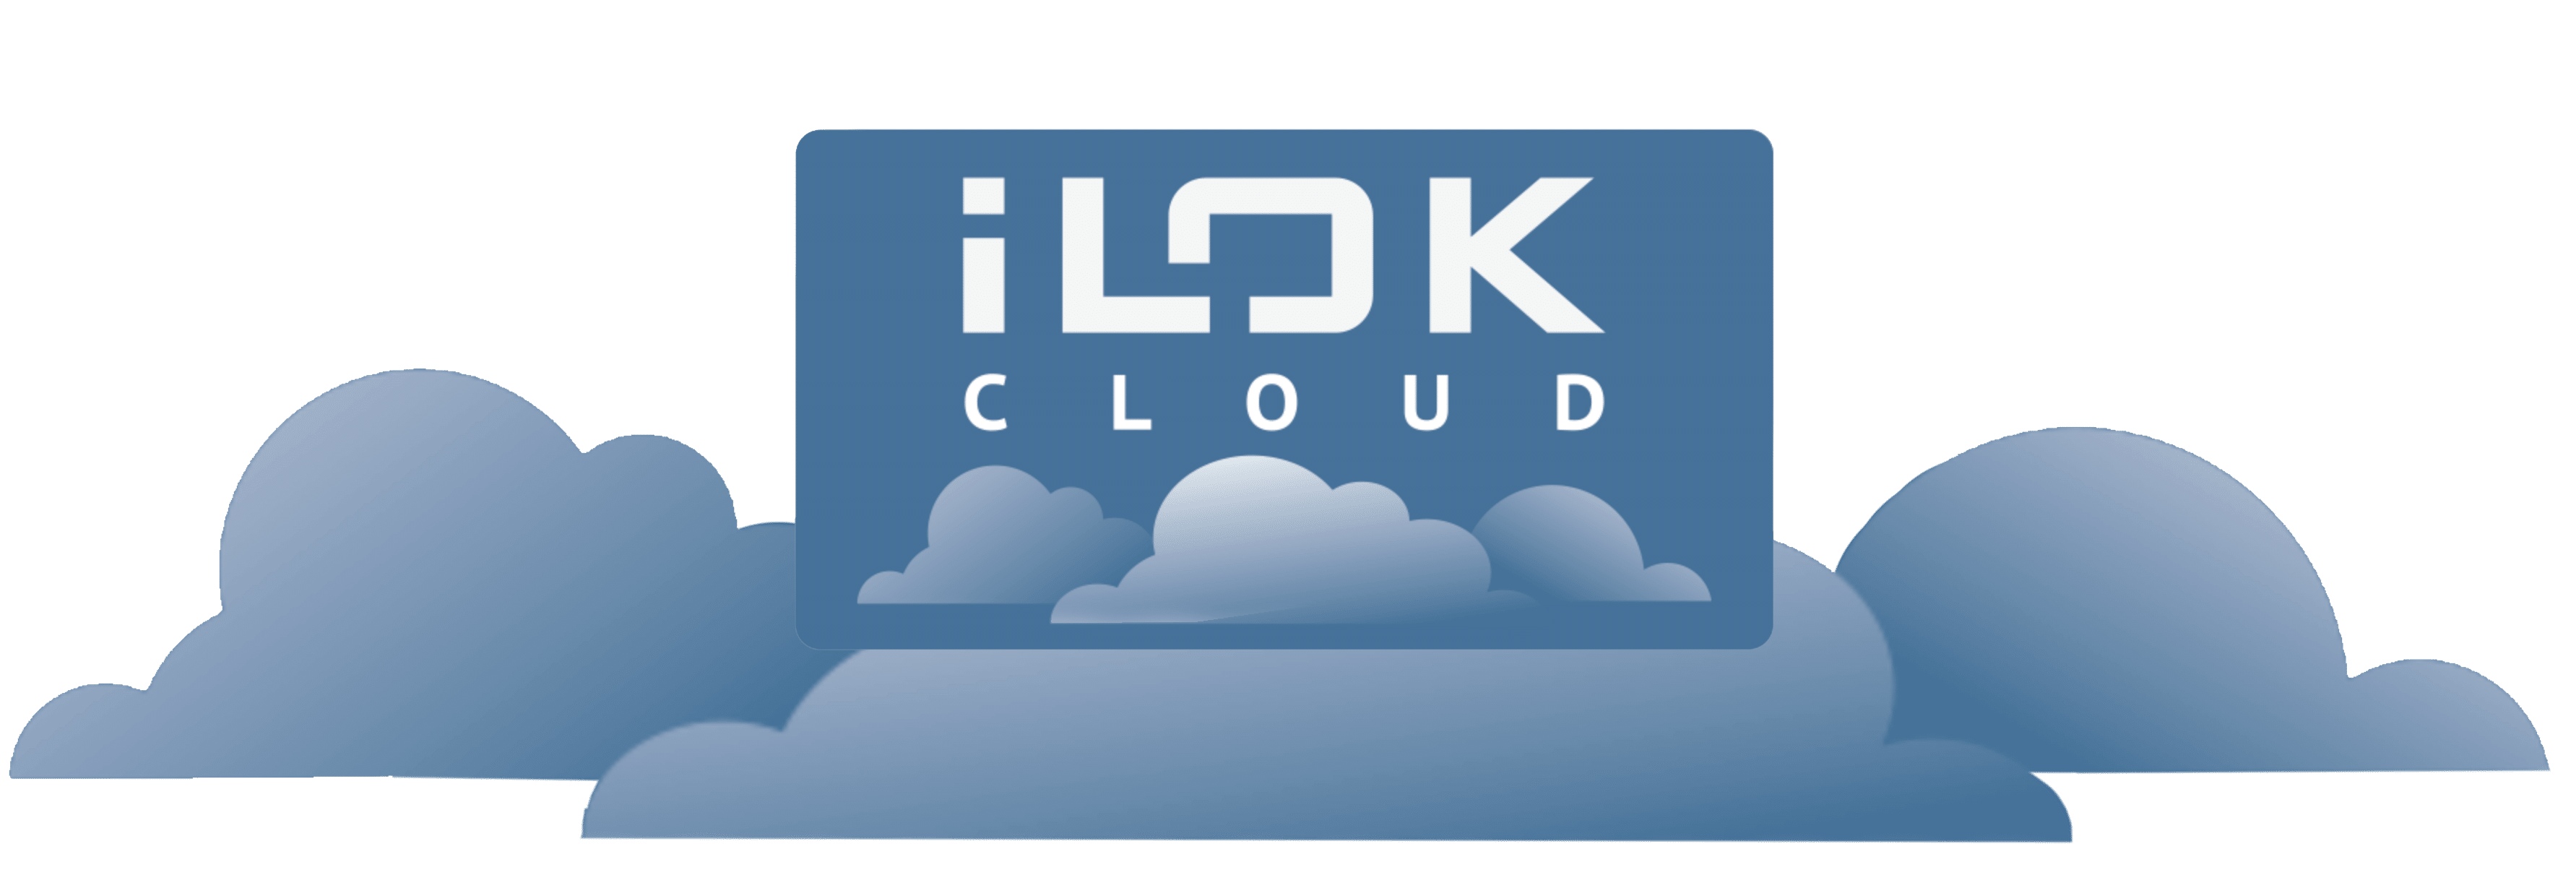 ilok registration code free